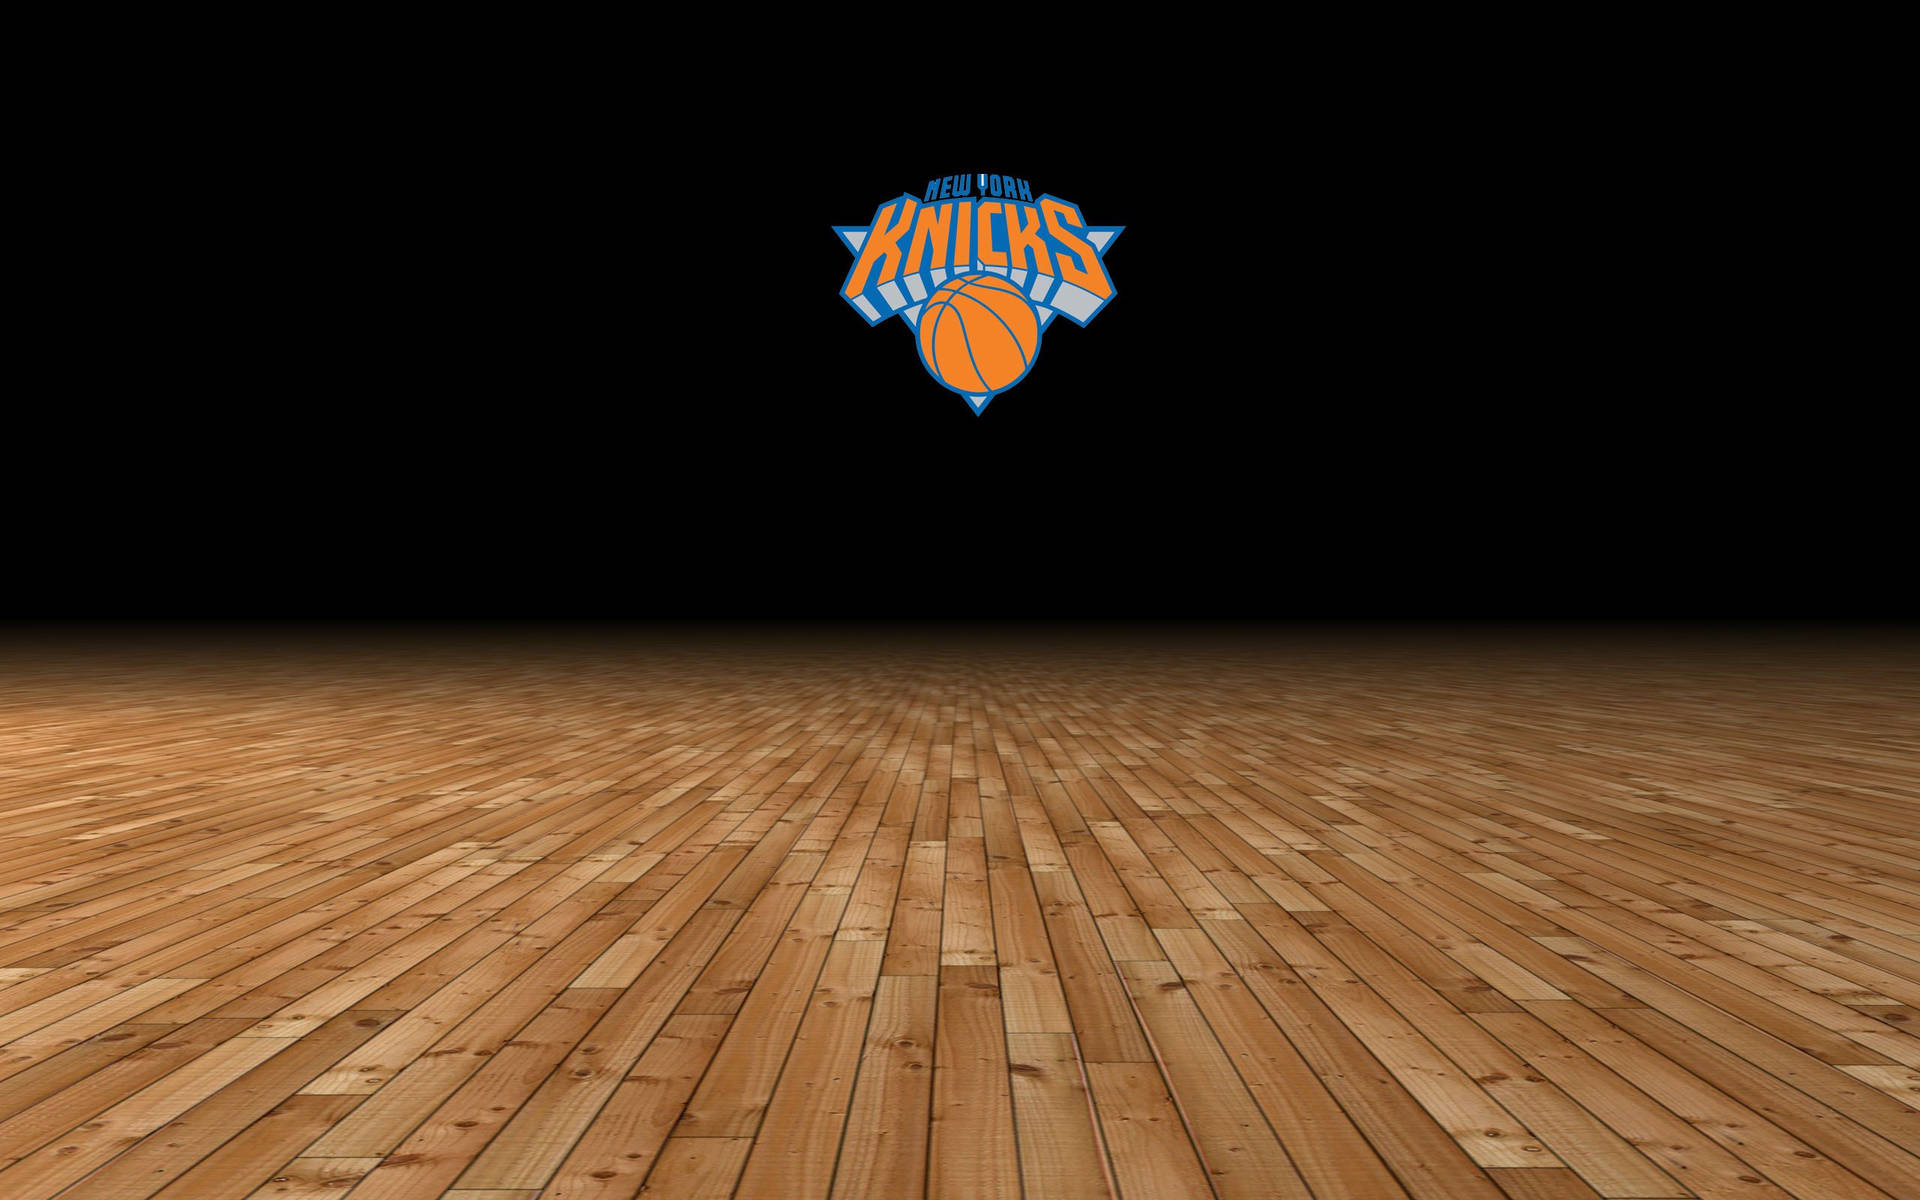 New York Knicks Wooden Floor Background